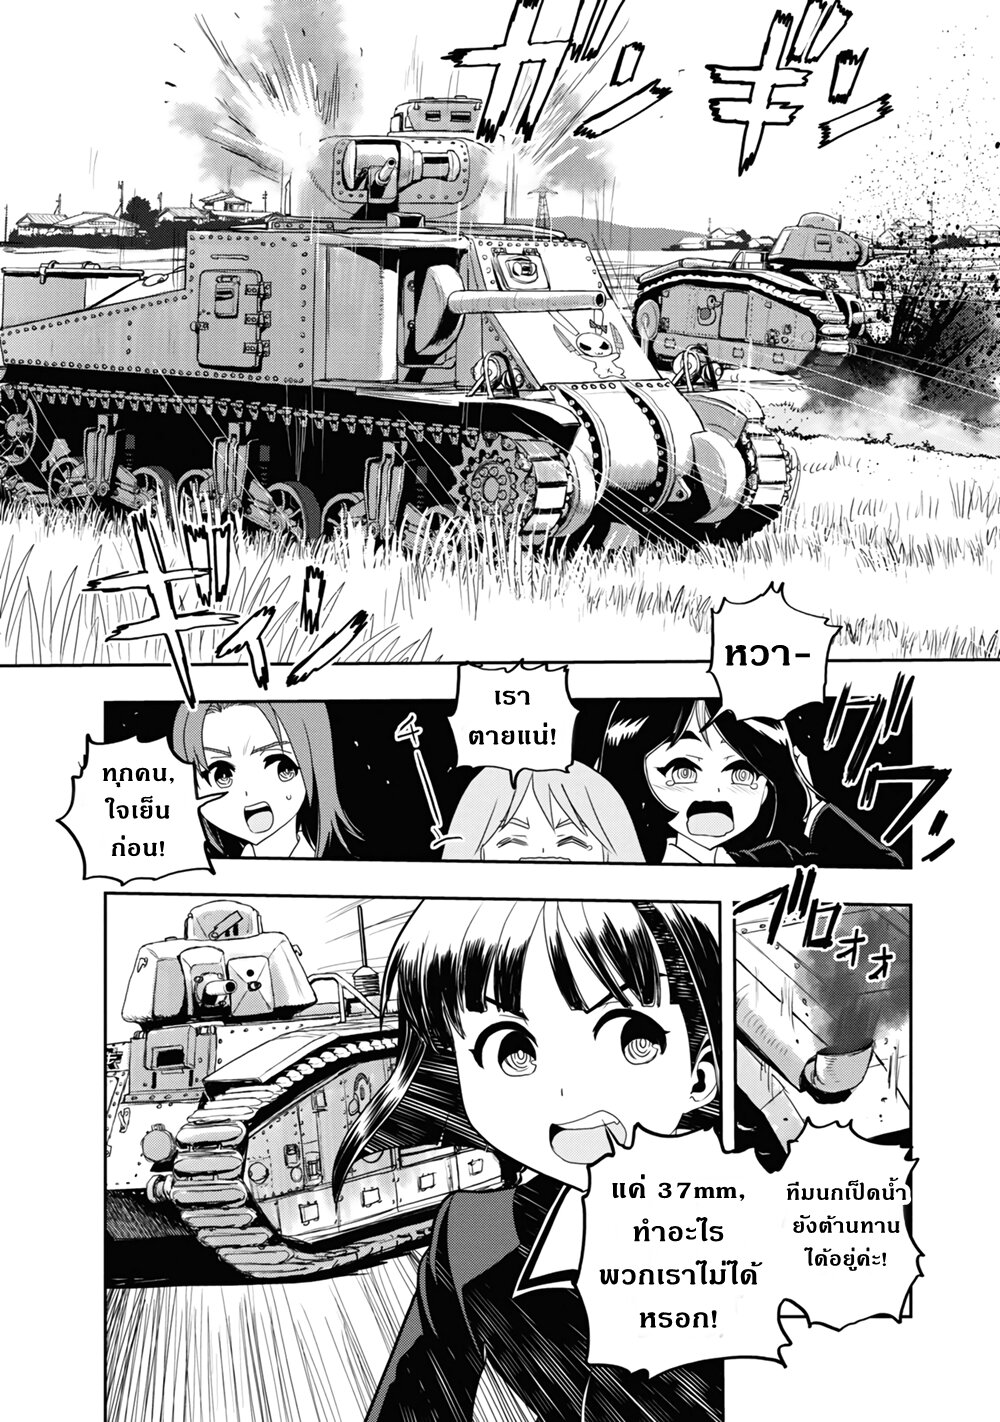 Girls und Panzer – Ribbon no Musha60 (16)